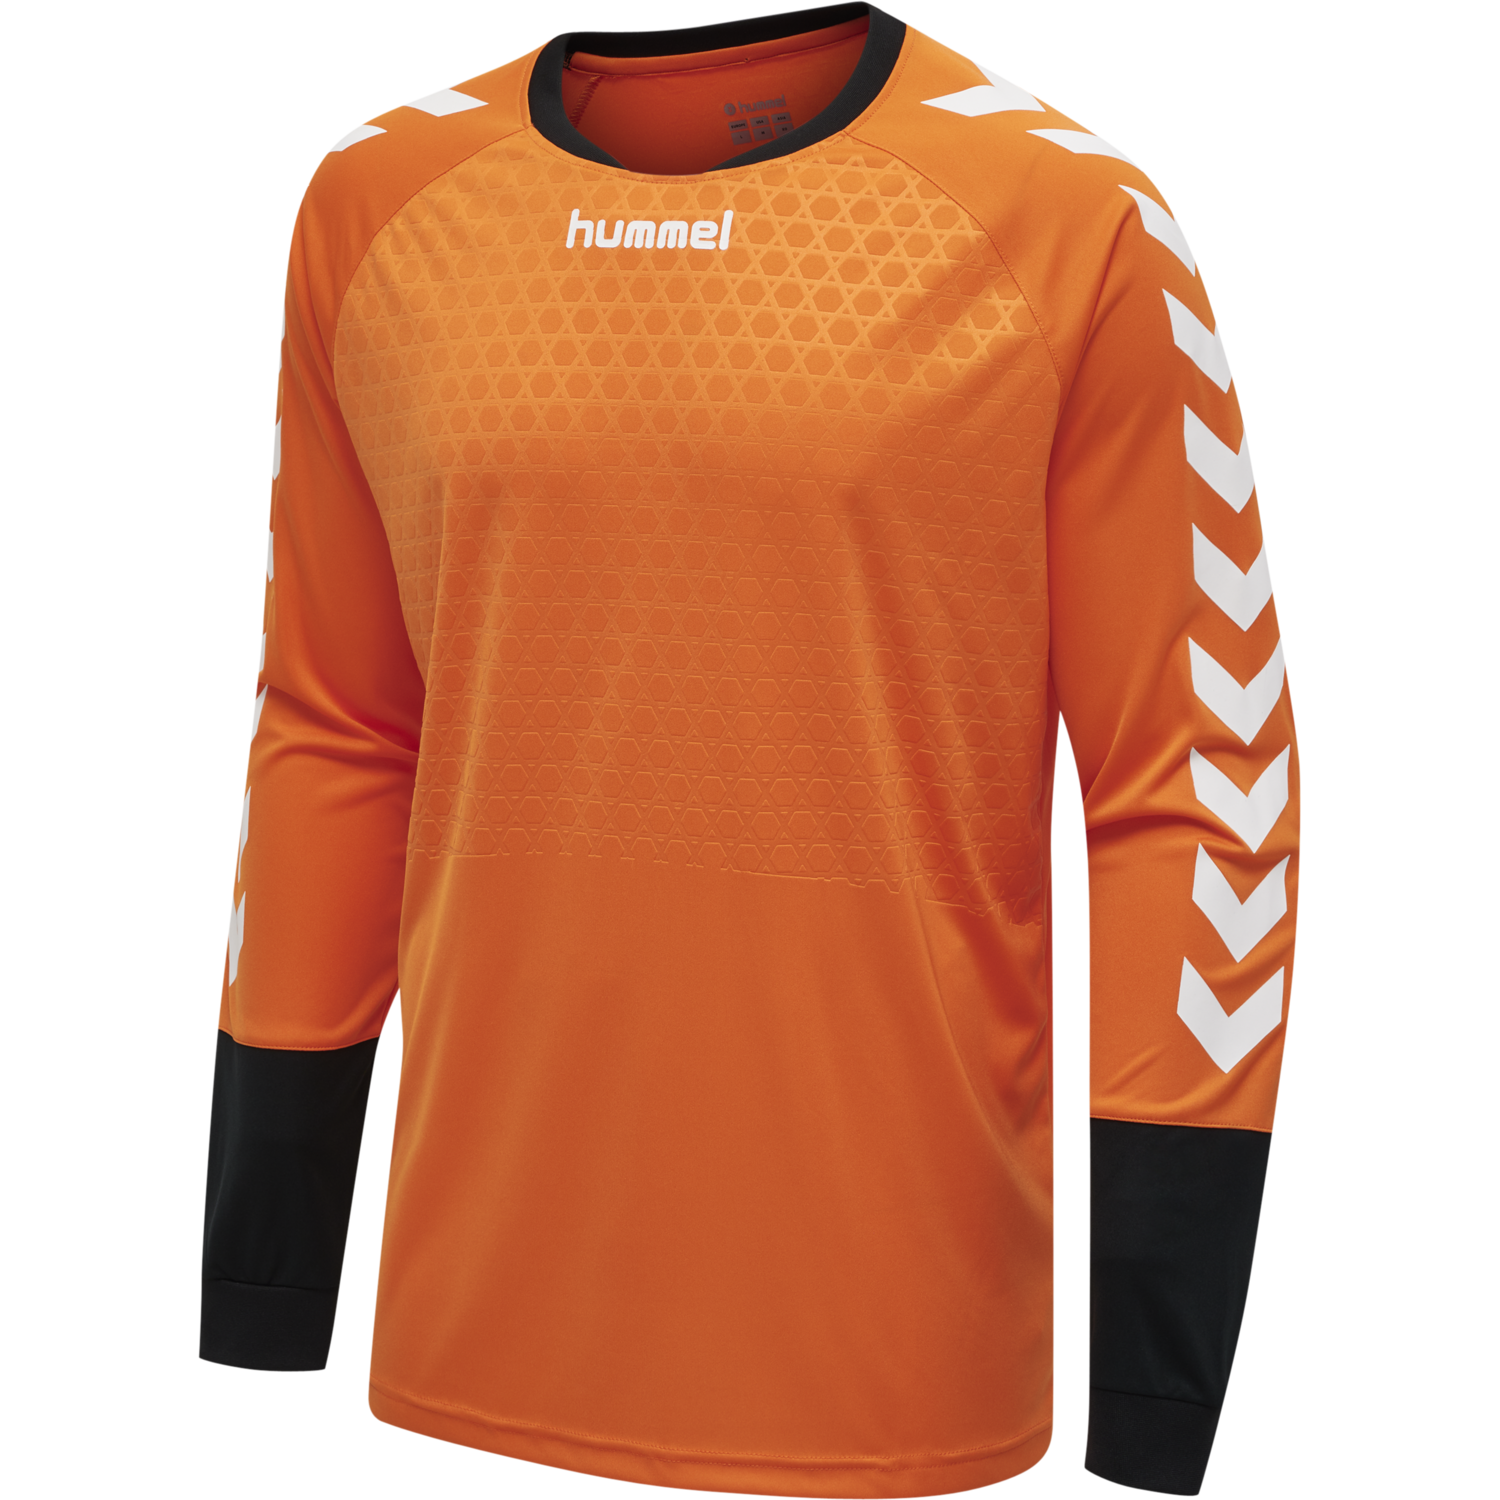 Lotto youth junior size football goalkeeper shirt orange black personalized 